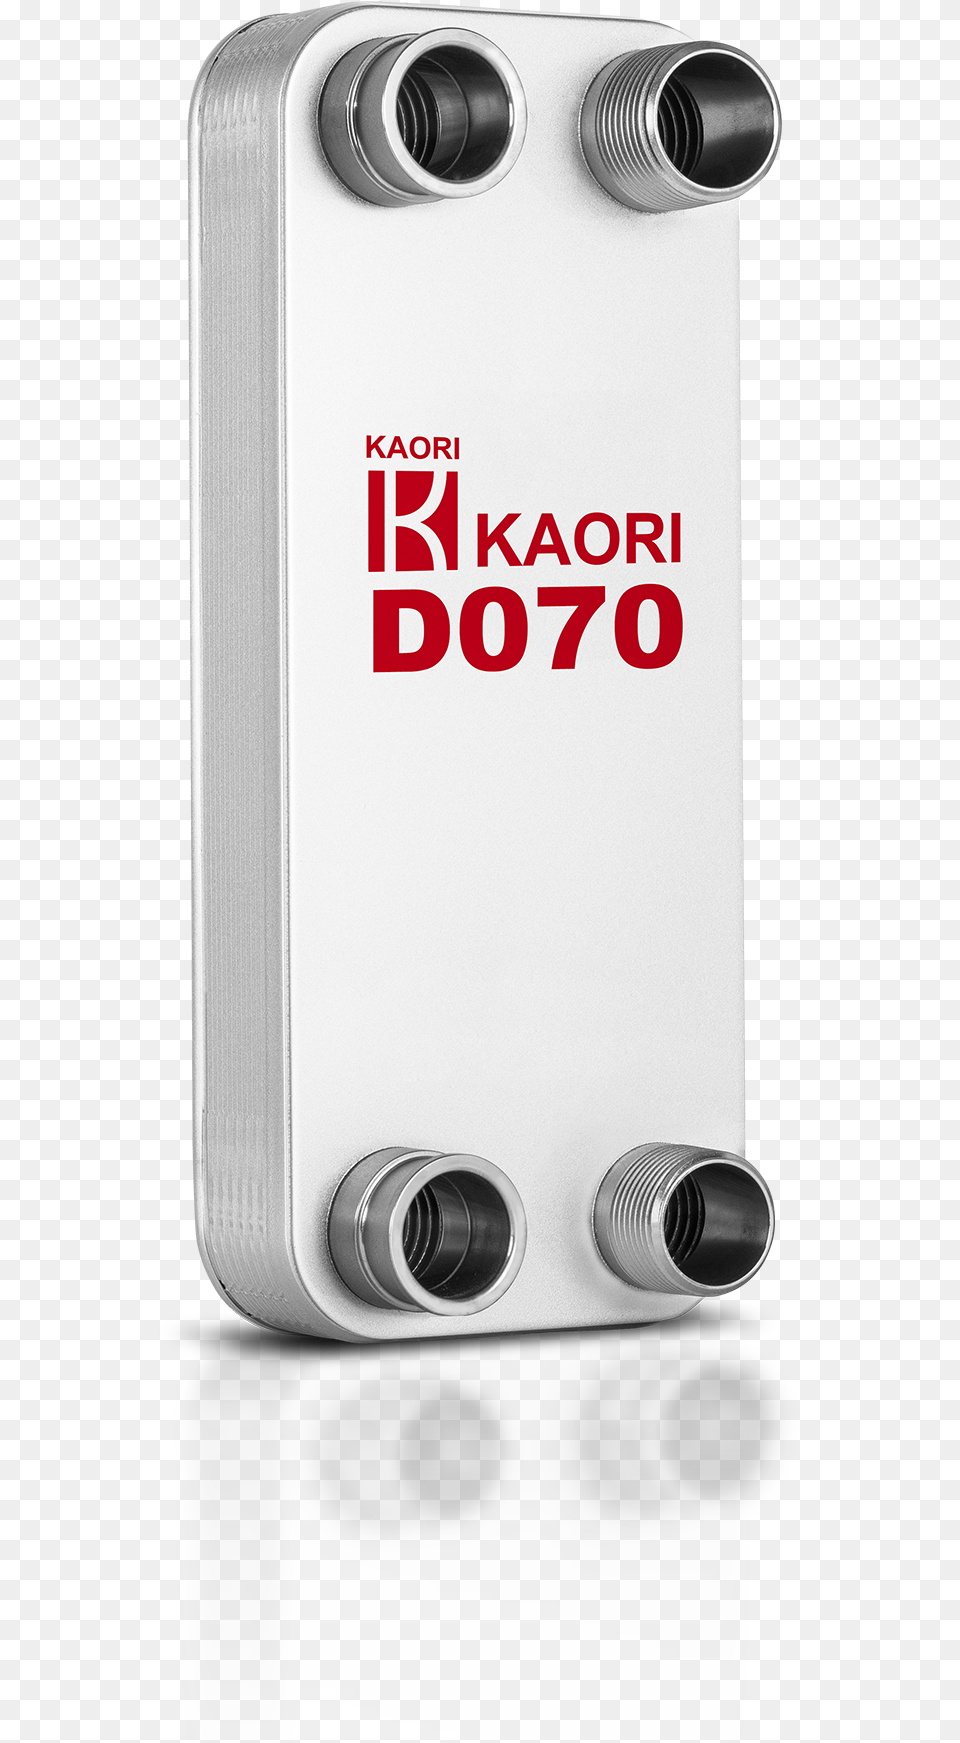 Kaori D070 Double Wall Bphe Kaori Plate Heat Exchanger, Camera, Electronics Free Png